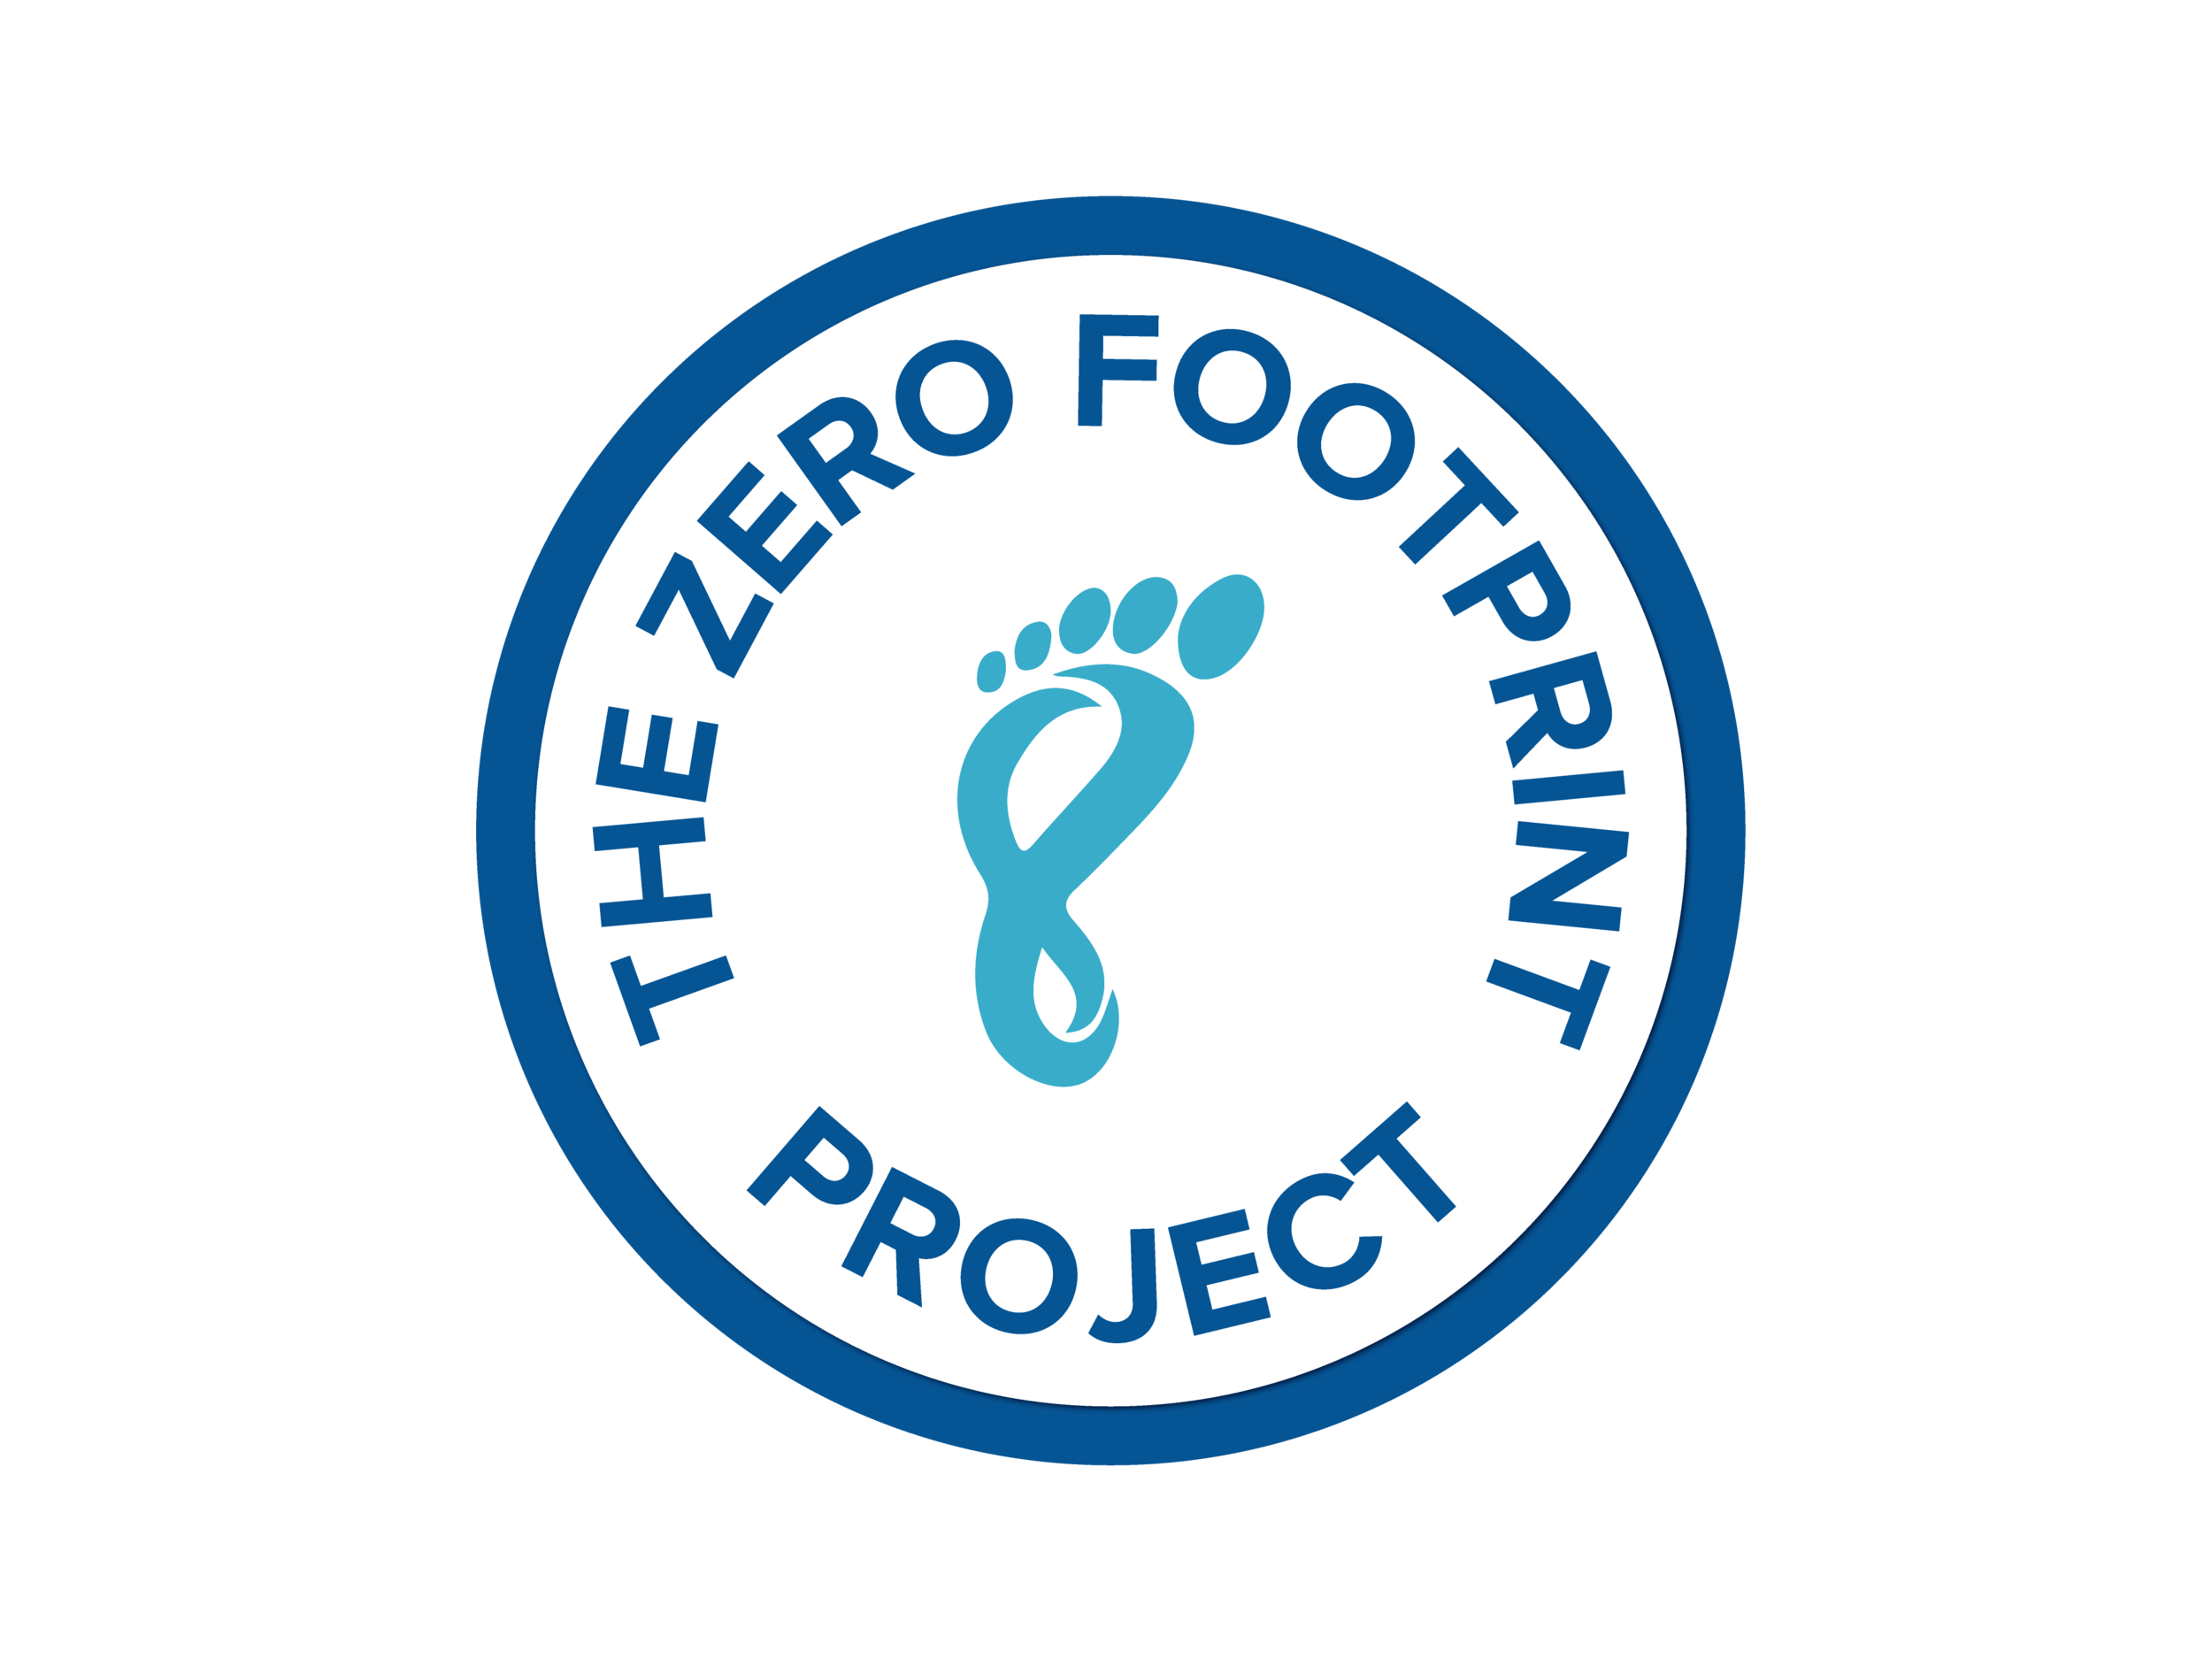 The Zero Footprint Project 